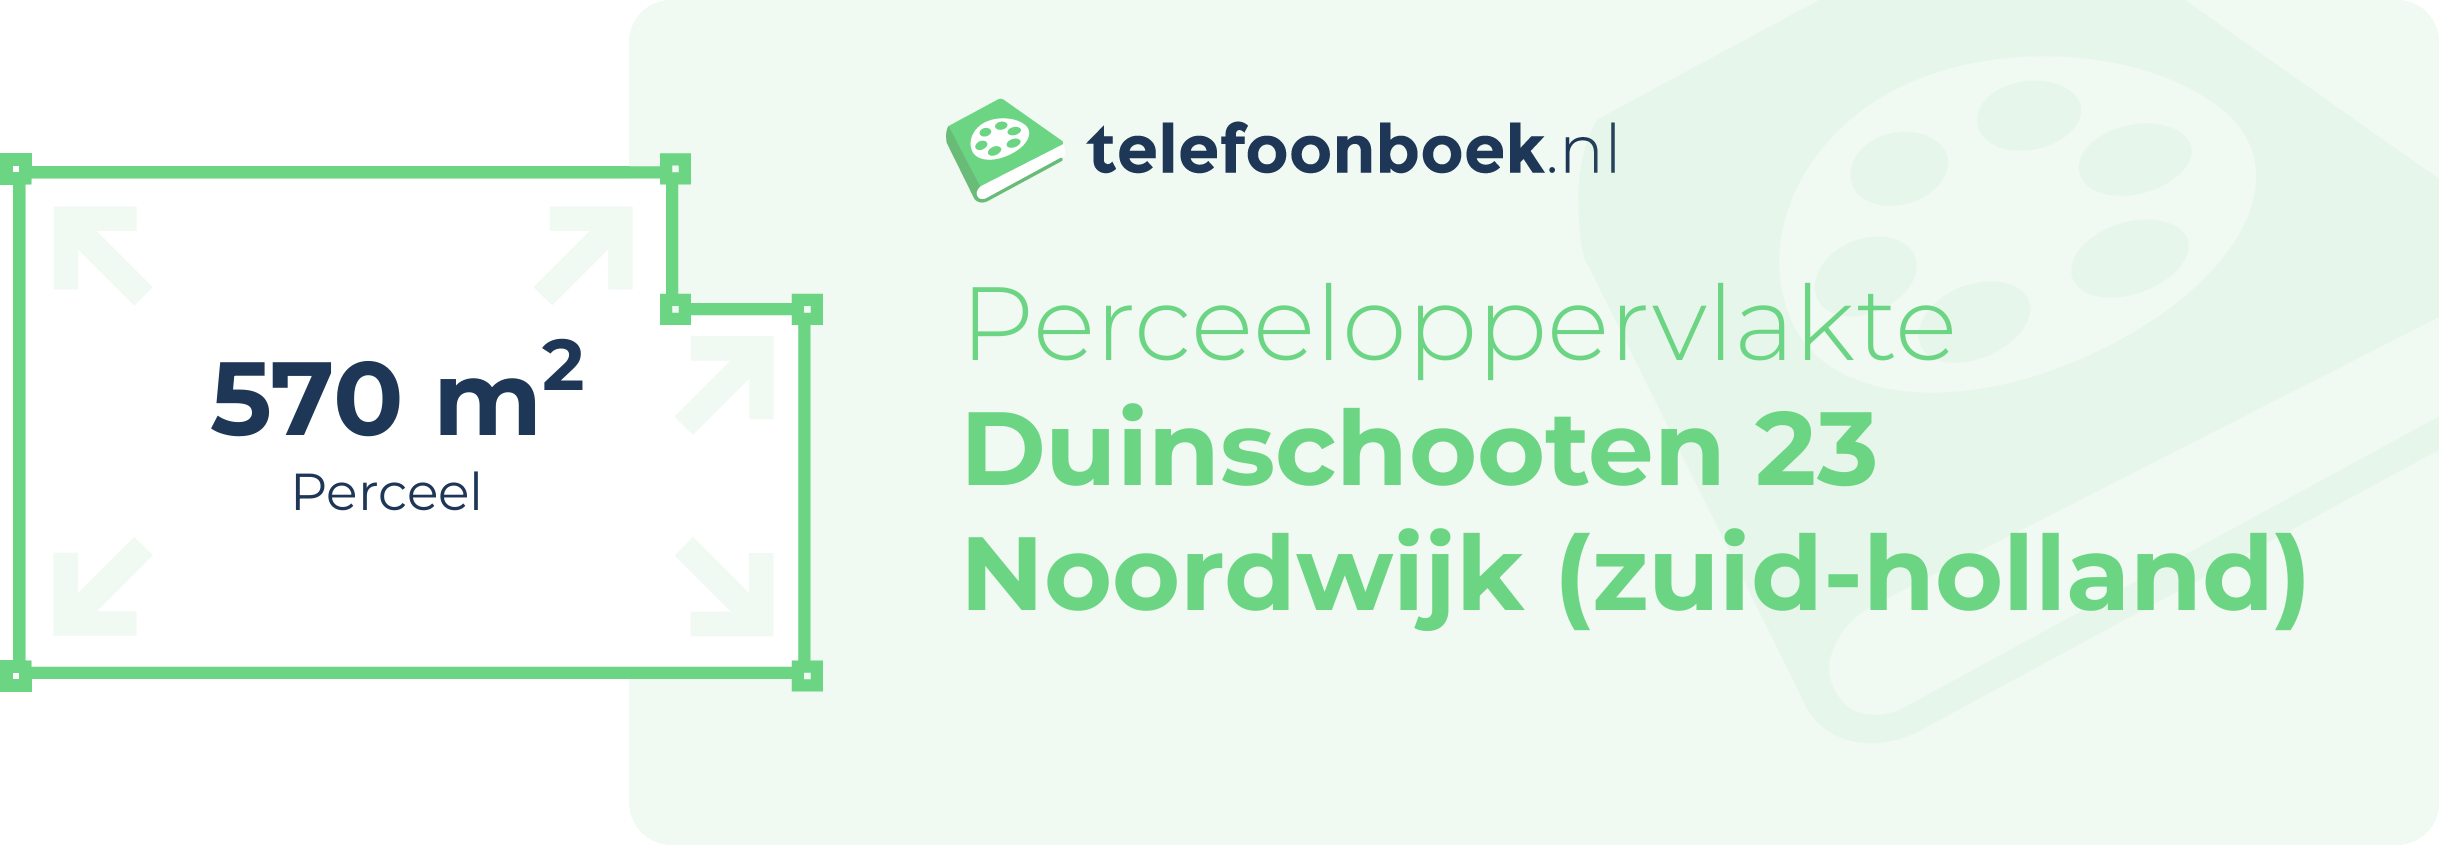 Perceeloppervlakte Duinschooten 23 Noordwijk (Zuid-Holland)